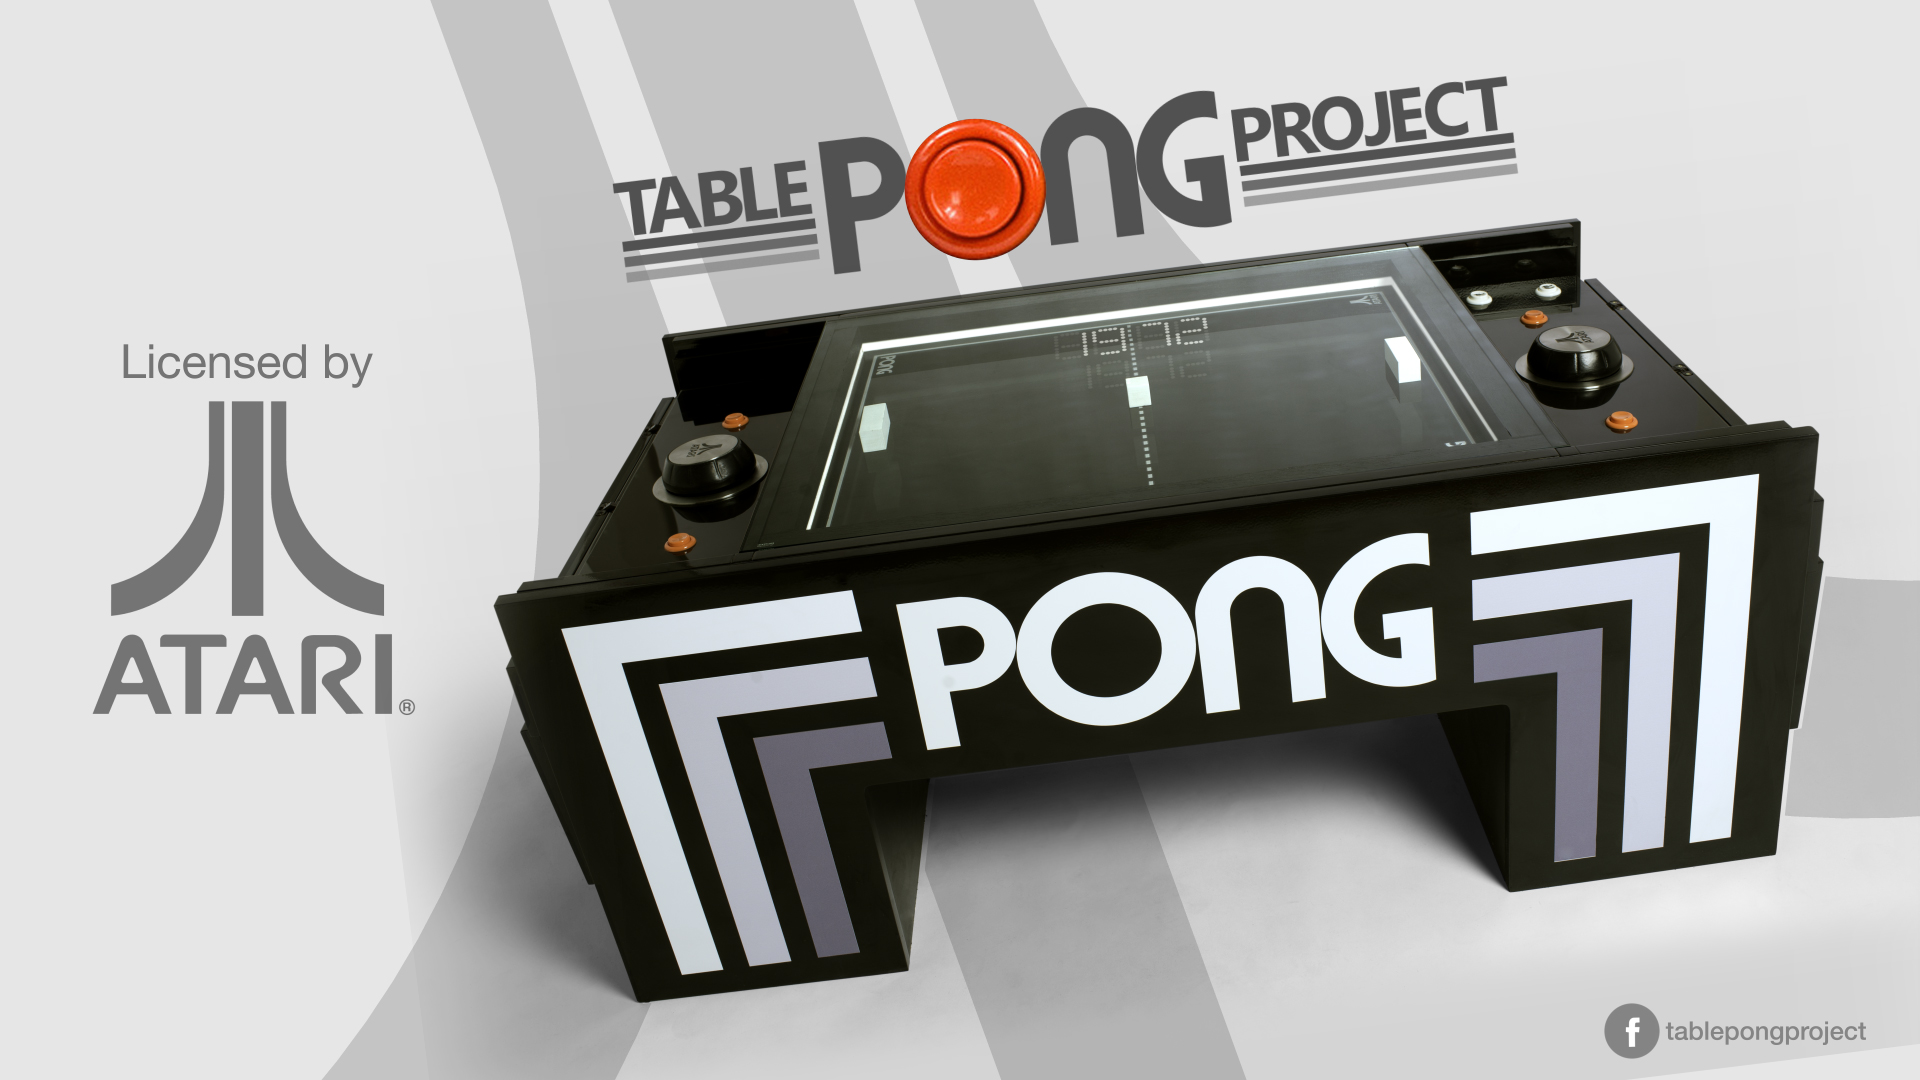 Atari Table Pong Project Kickstarter Campaign Kicks Off on February 7th